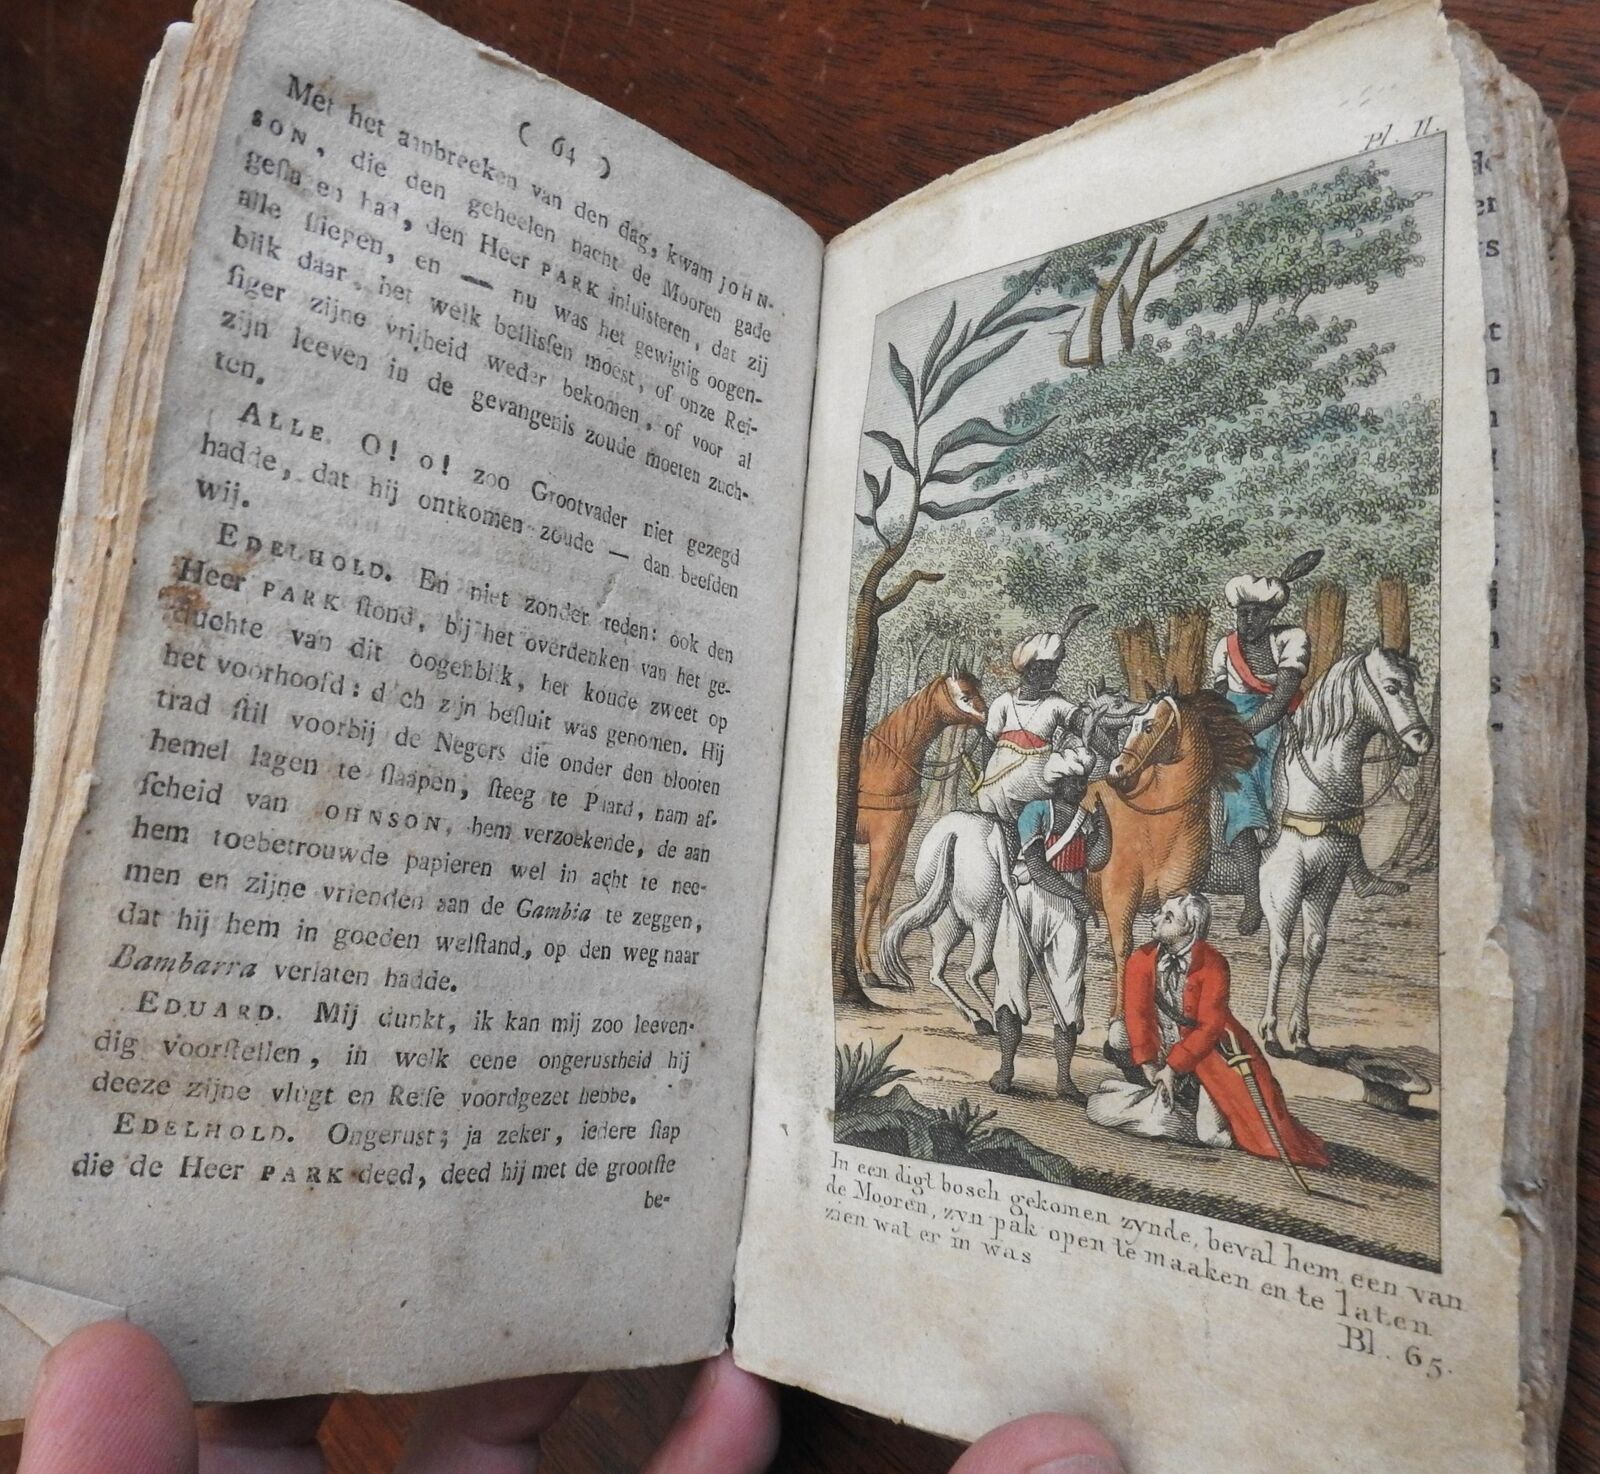 Remarkable Journeys Through Strange Lands 1818 American Indian rare Dutch book